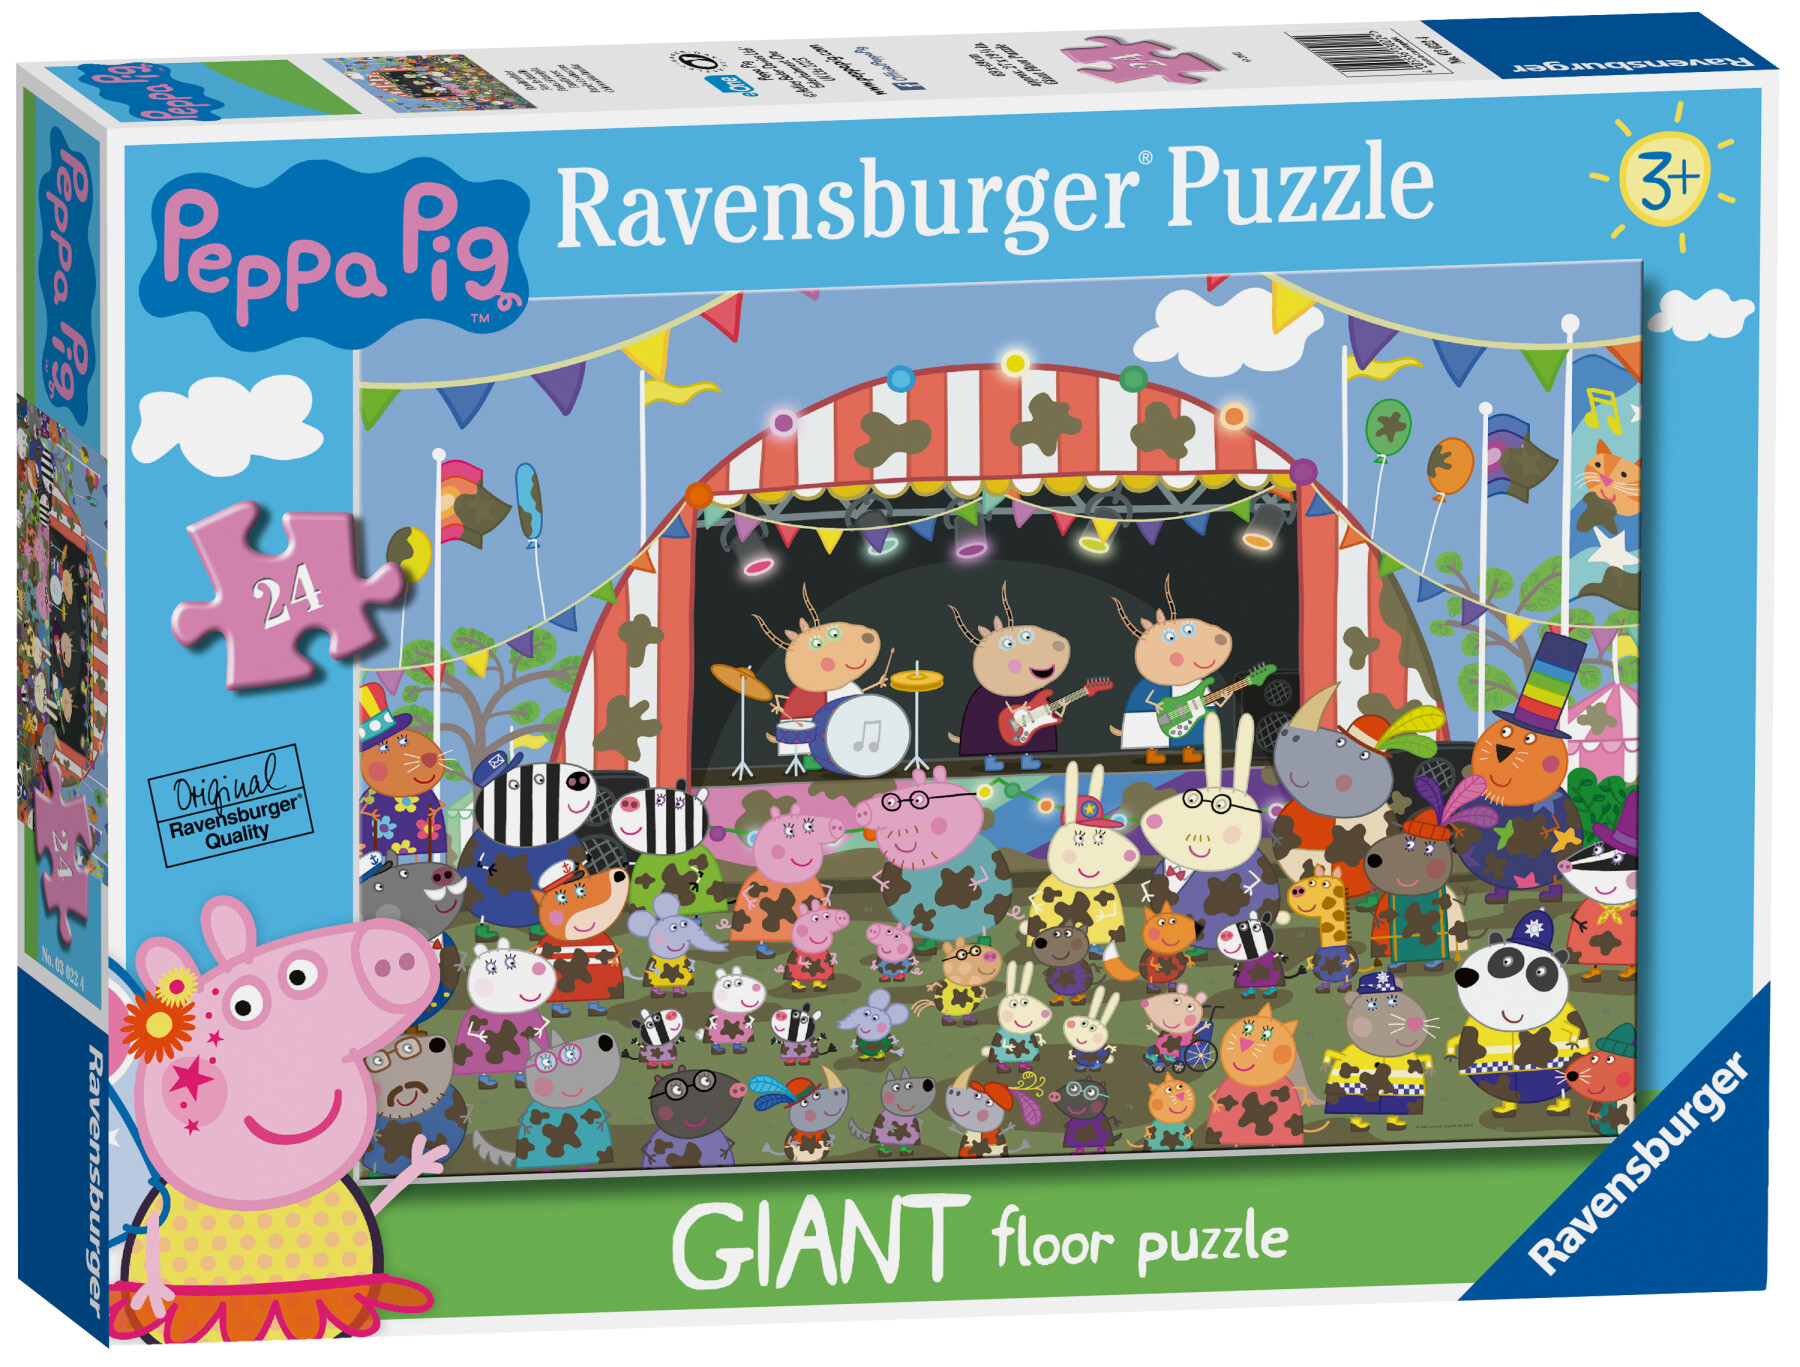 Ravensburger - puzzle peppa pig c, collezione 24 giant pavimento, 24 pezzi, età raccomandata 3+ anni - RAVENSBURGER